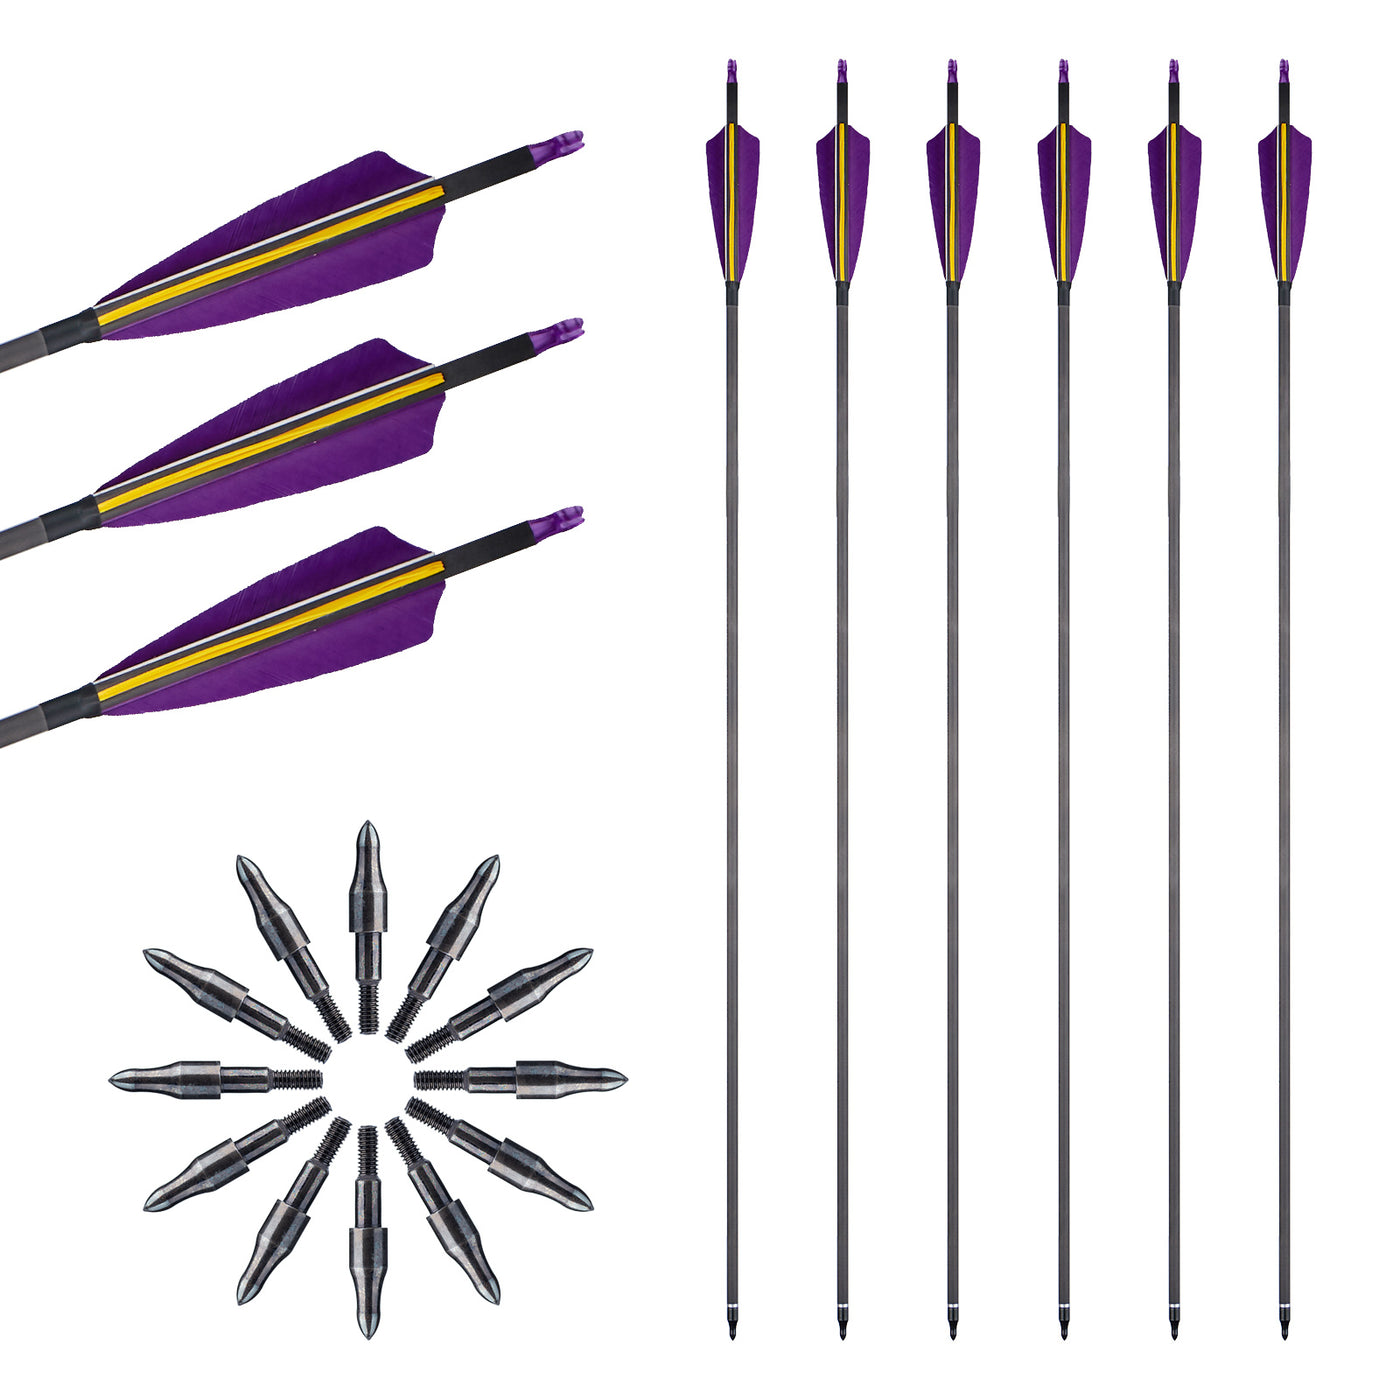 12x 32" OD 7.5mm ID 6.2mm Straightness 0.003 Spine 400 4" Shield Turkey Field Feather Pure Carbon Archery Arrows